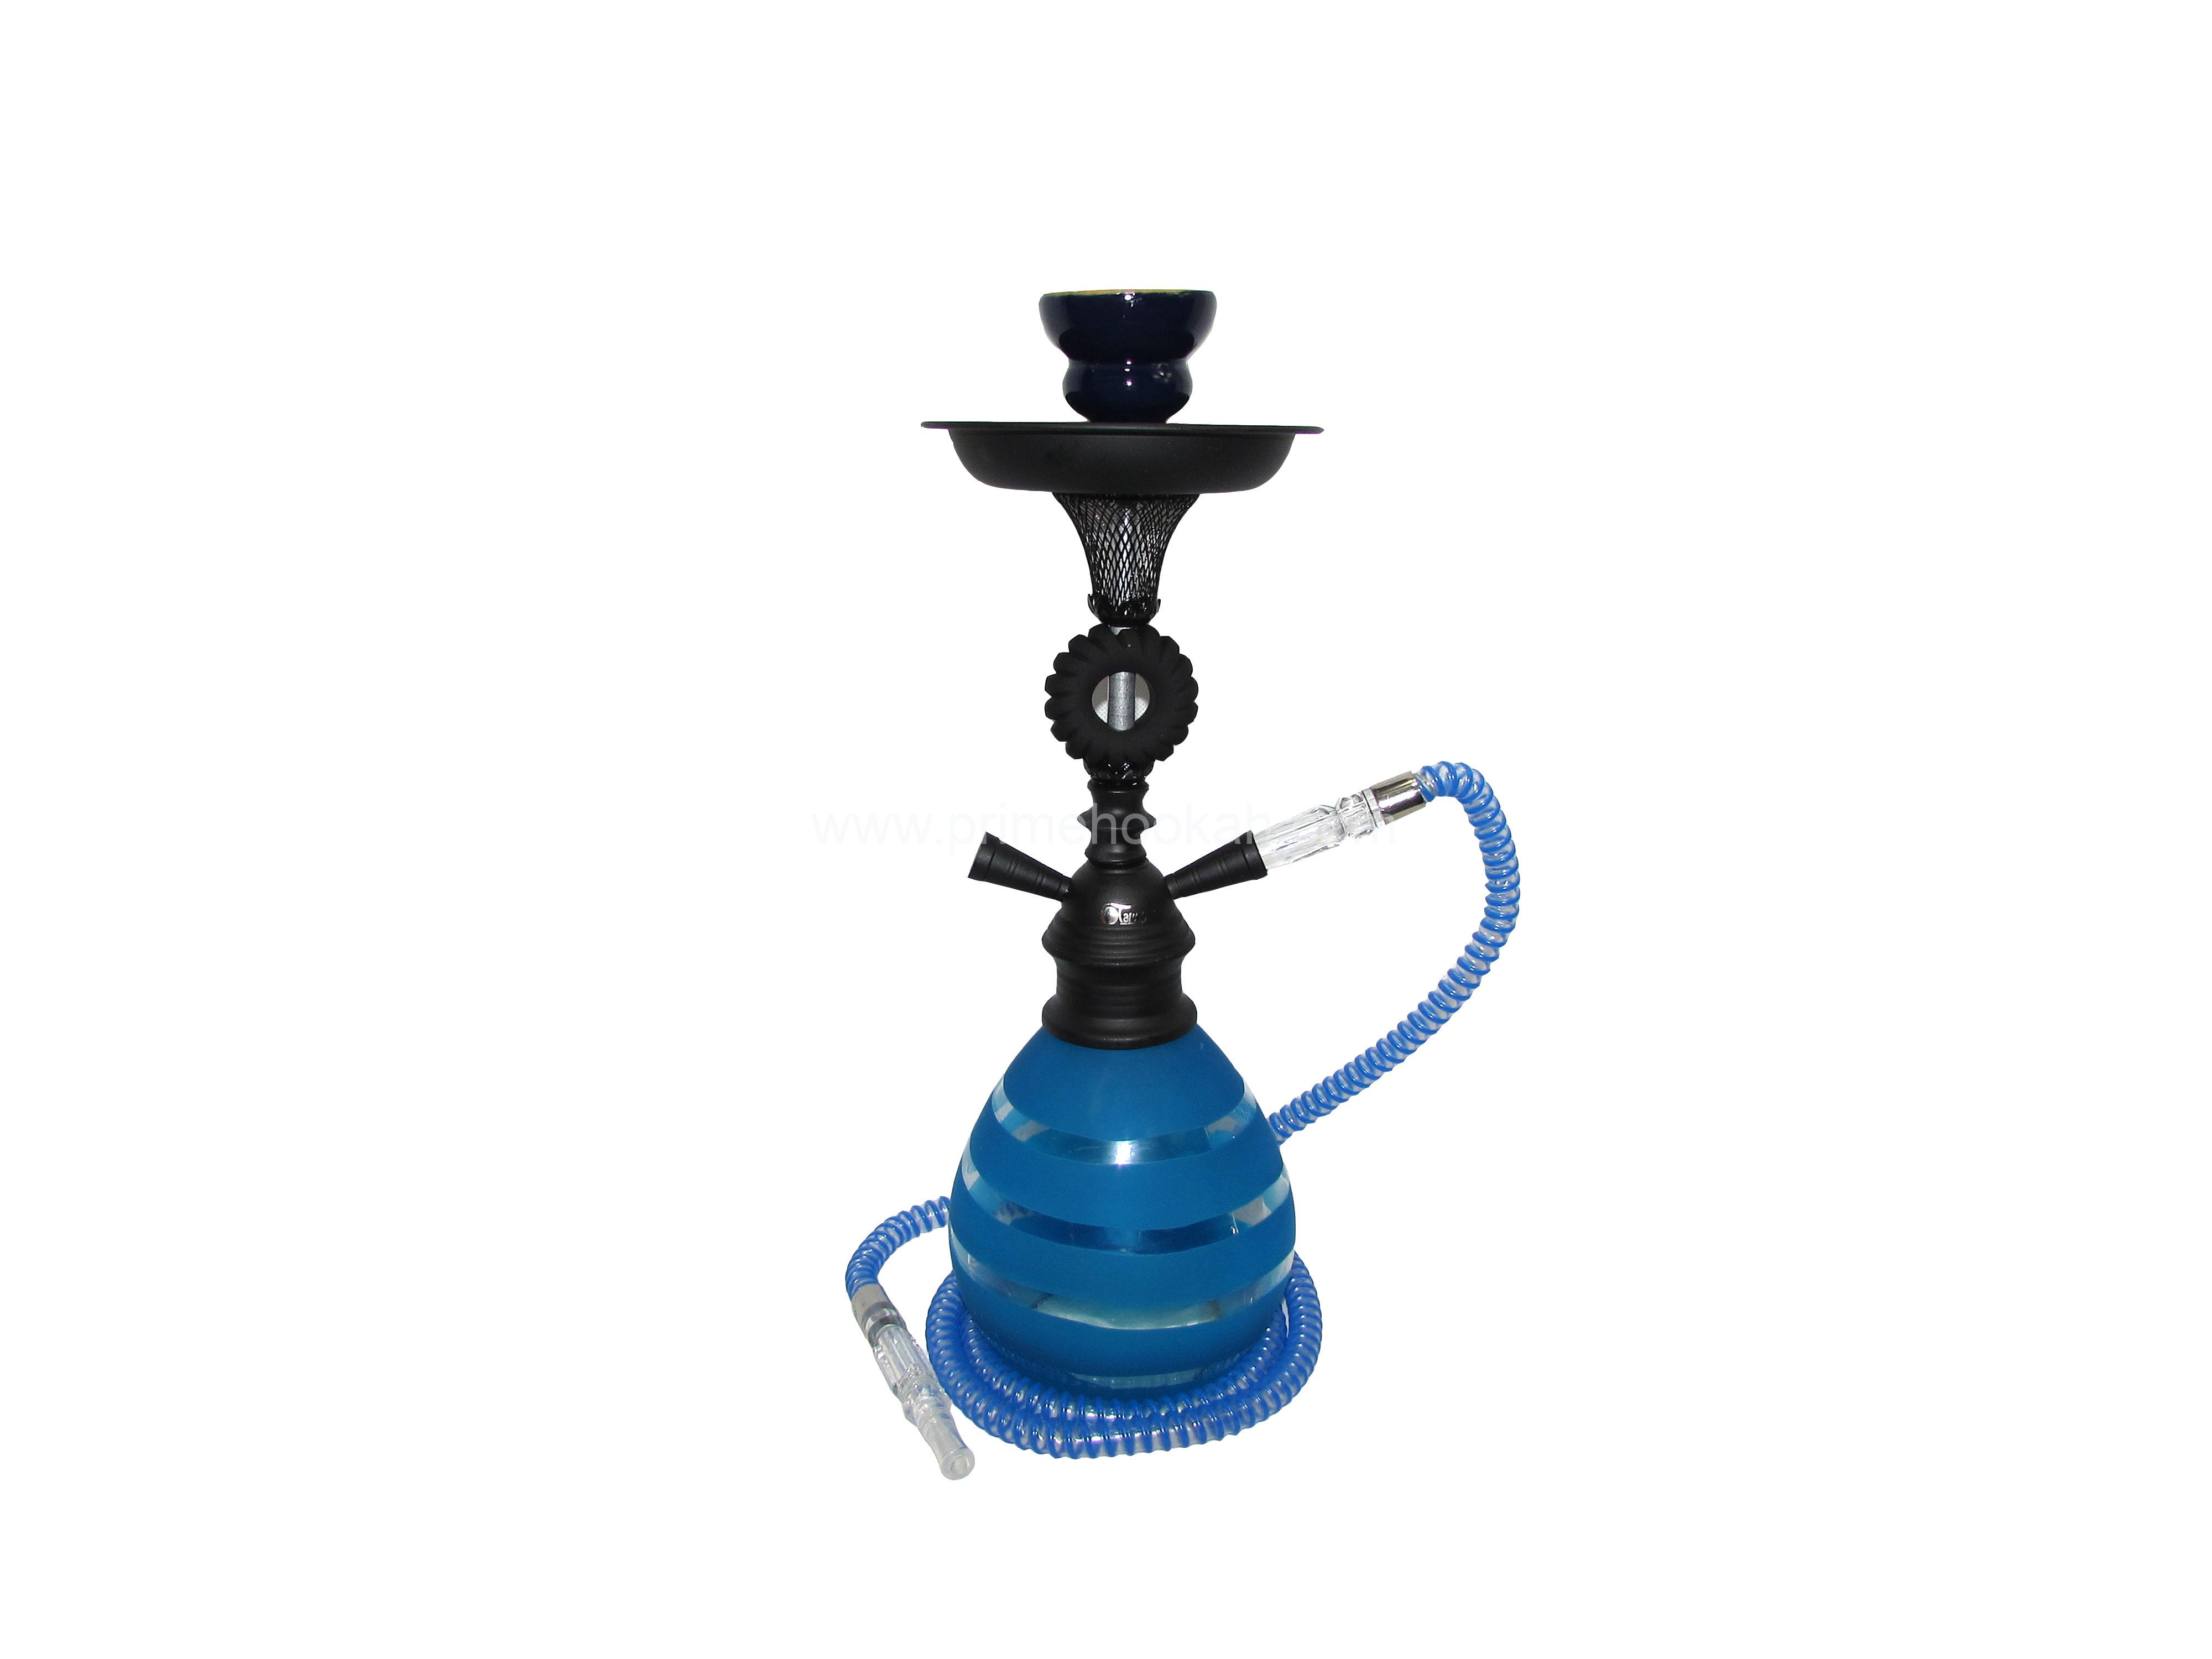  Hookah Shisha Nargila Smoking Water Pipe Bong Glass Tobacco 1  Hose Bowl Set RED Color : Health & Household